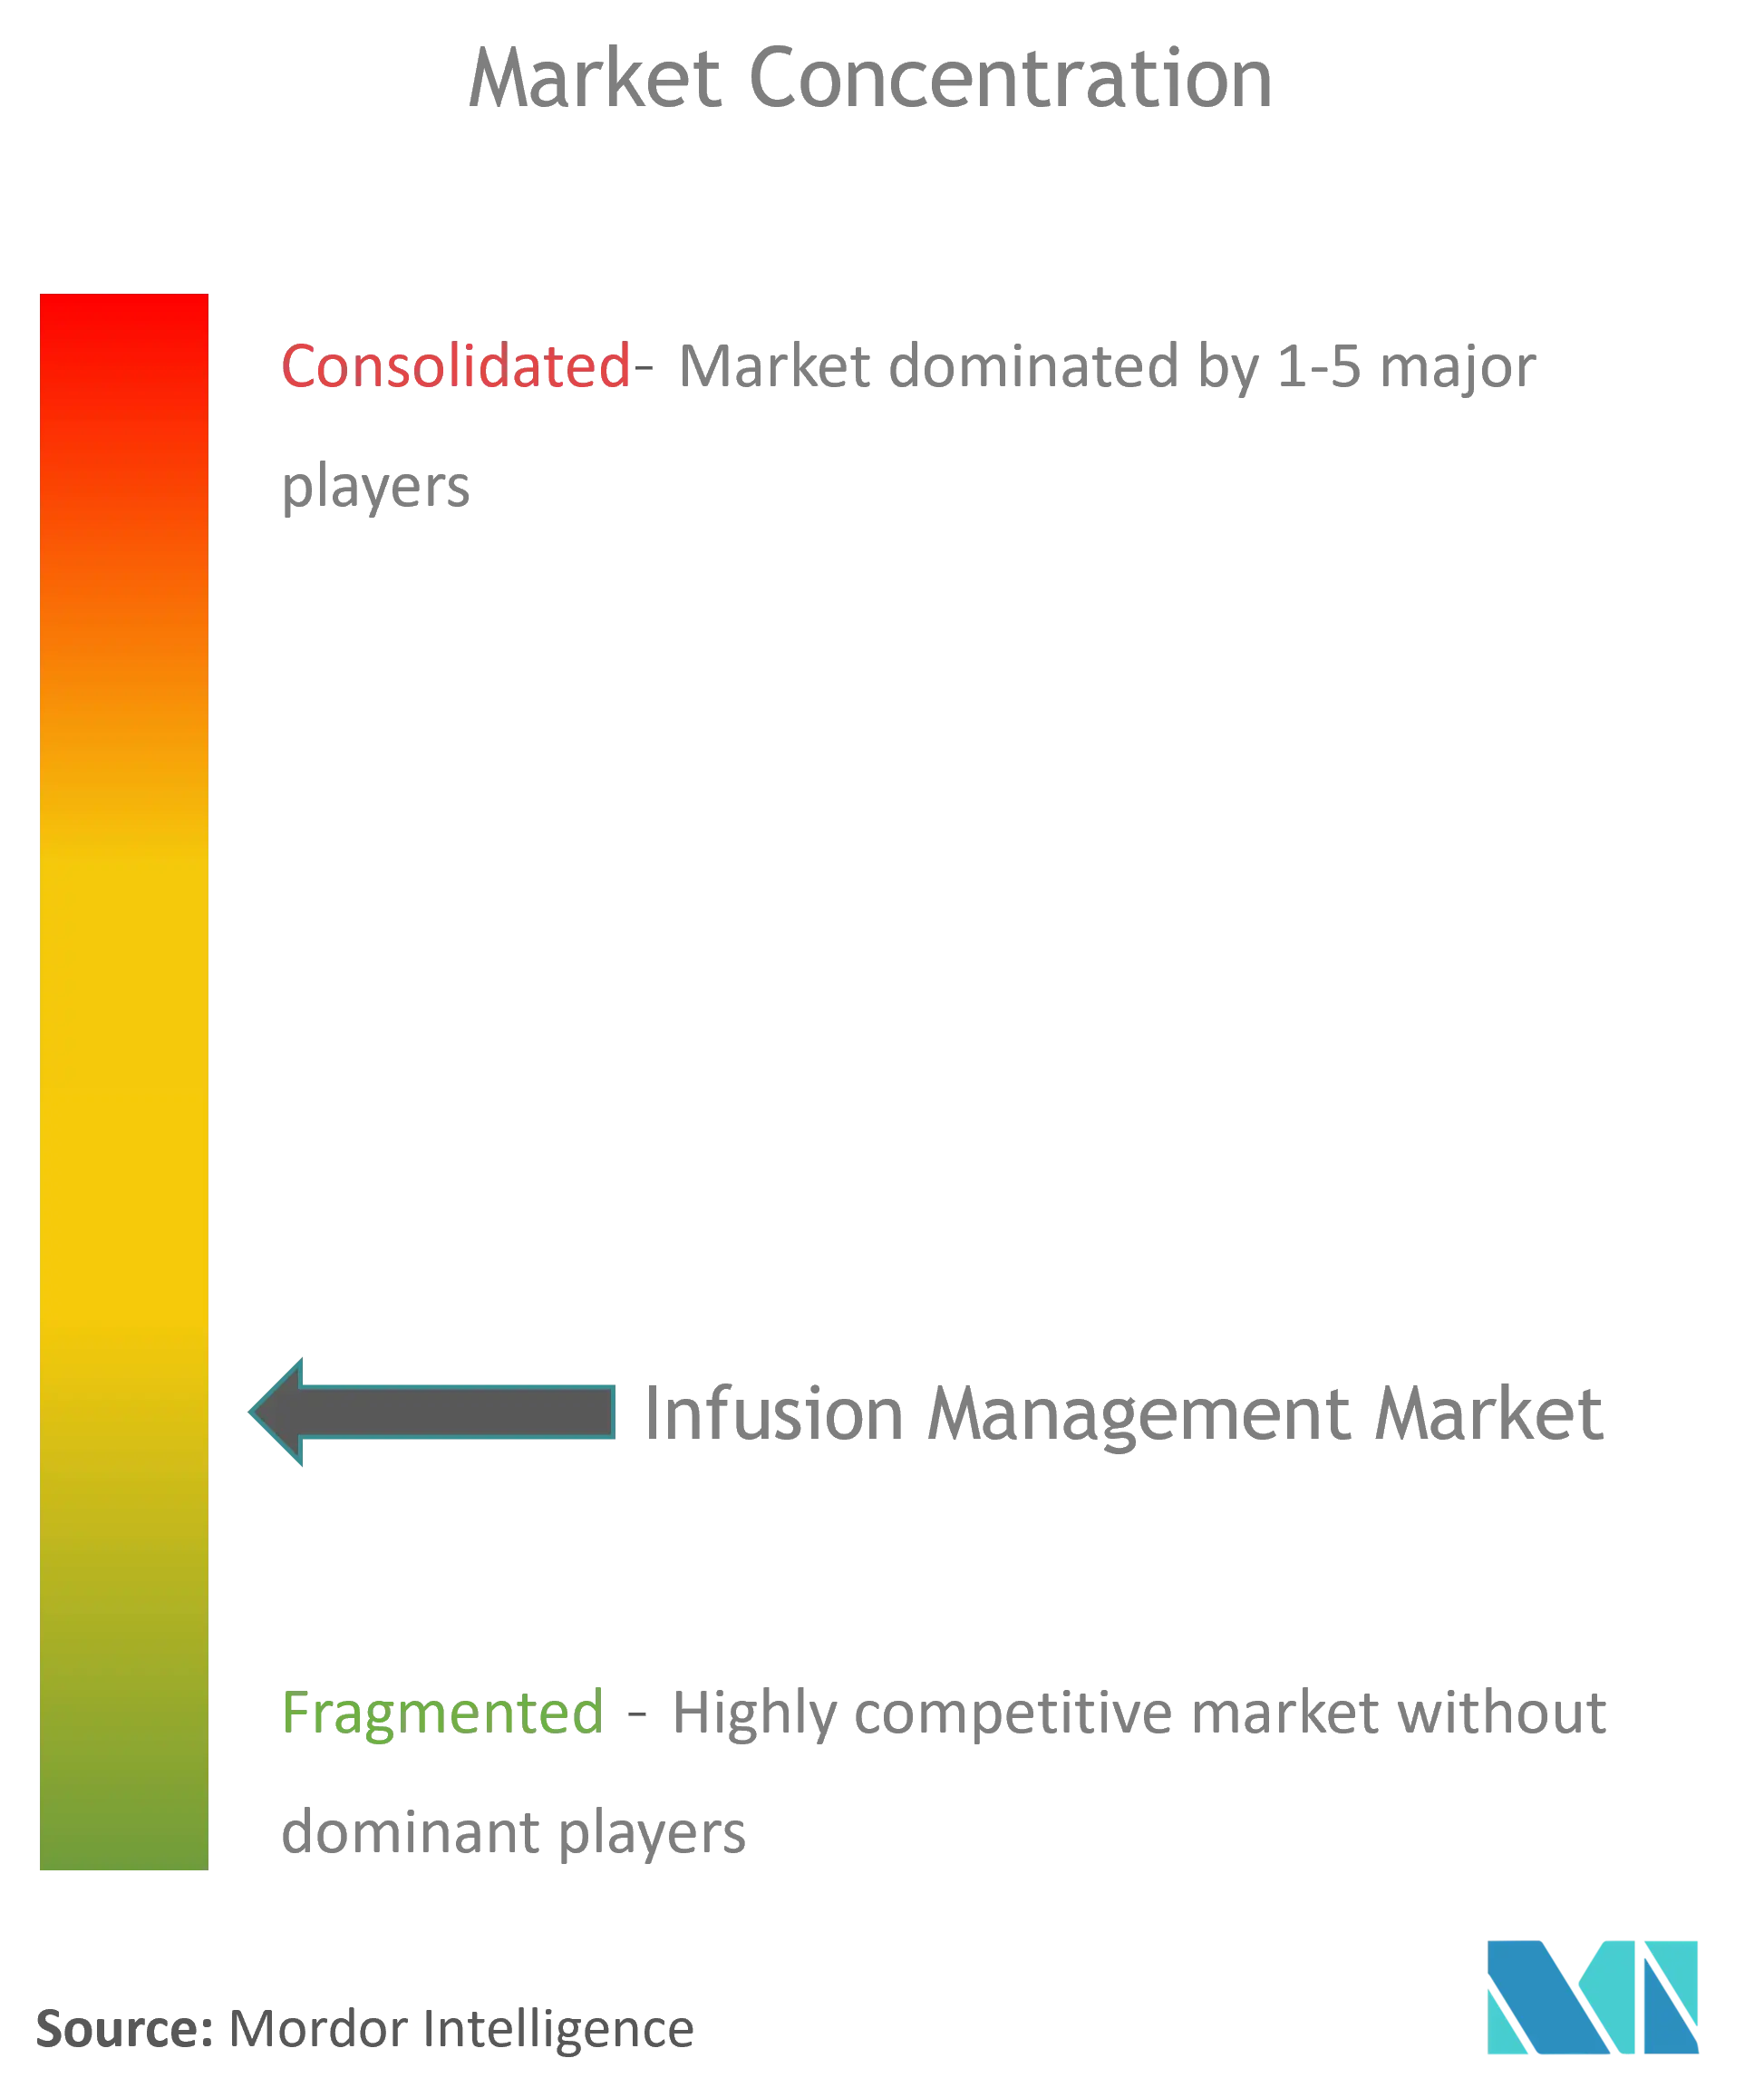 Infusion Management Market Concentration